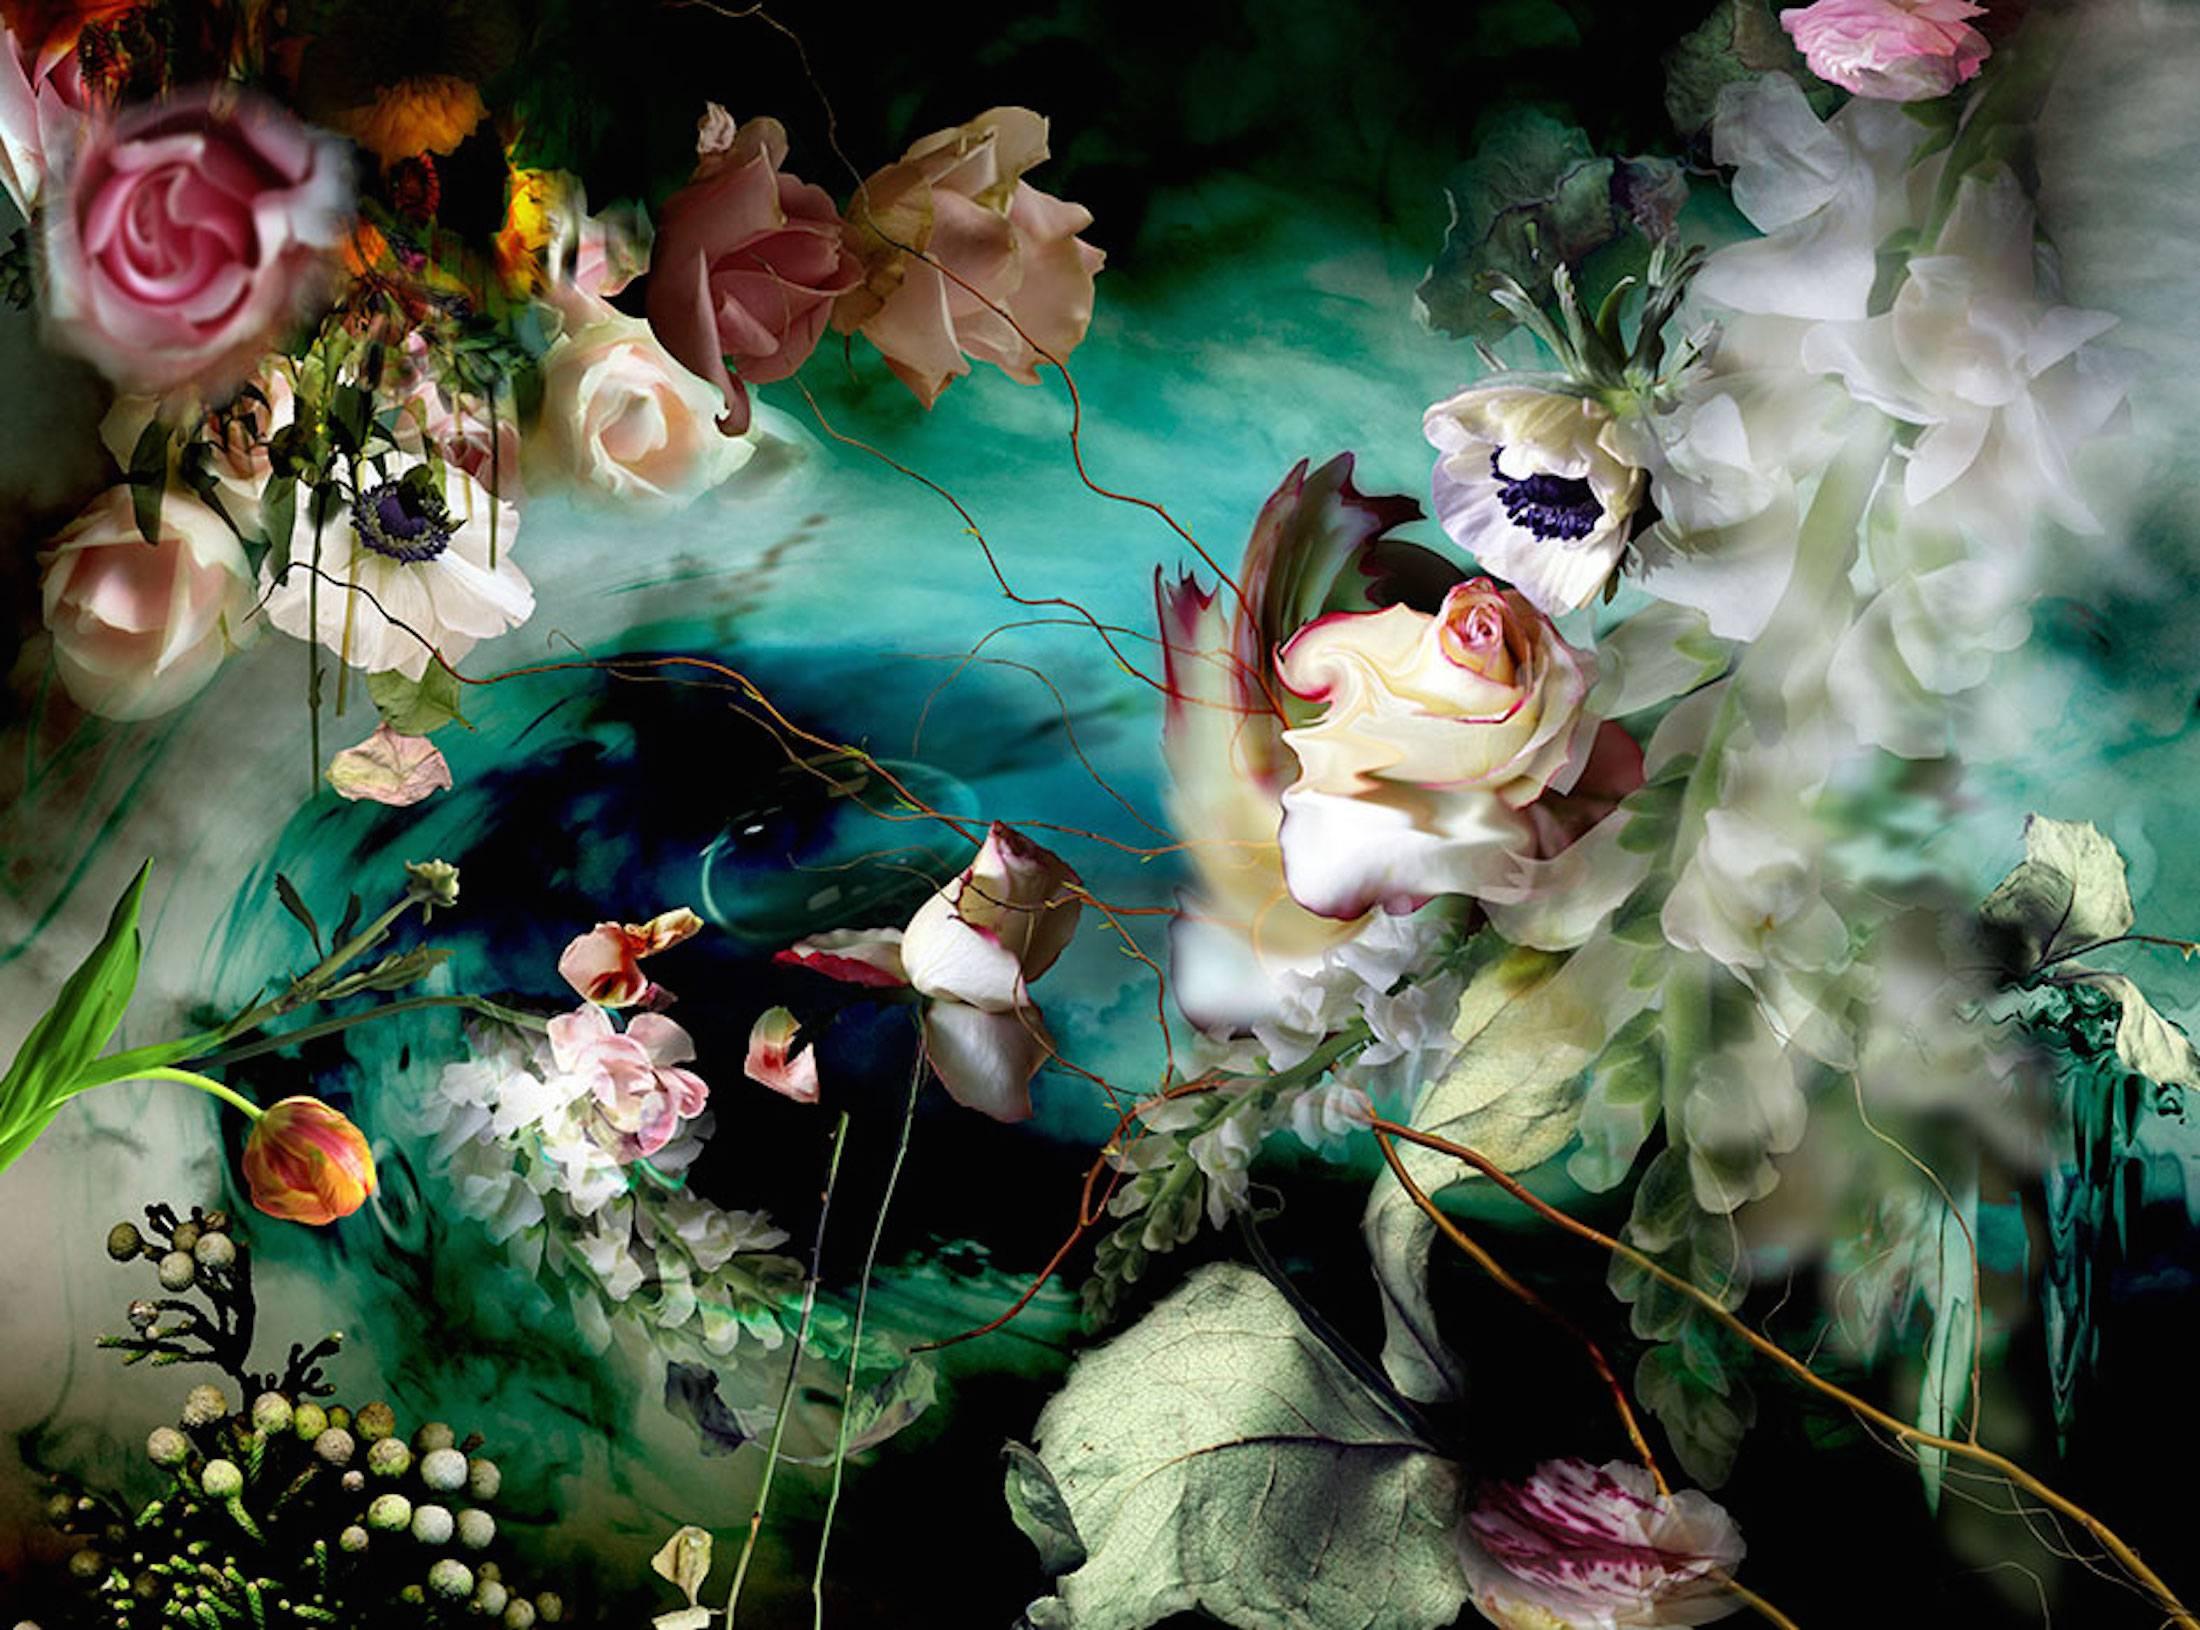 Isabelle Menin Still-Life Photograph - Embarquement pour Cythere #1 - Floral Color Photo Digital C-Print